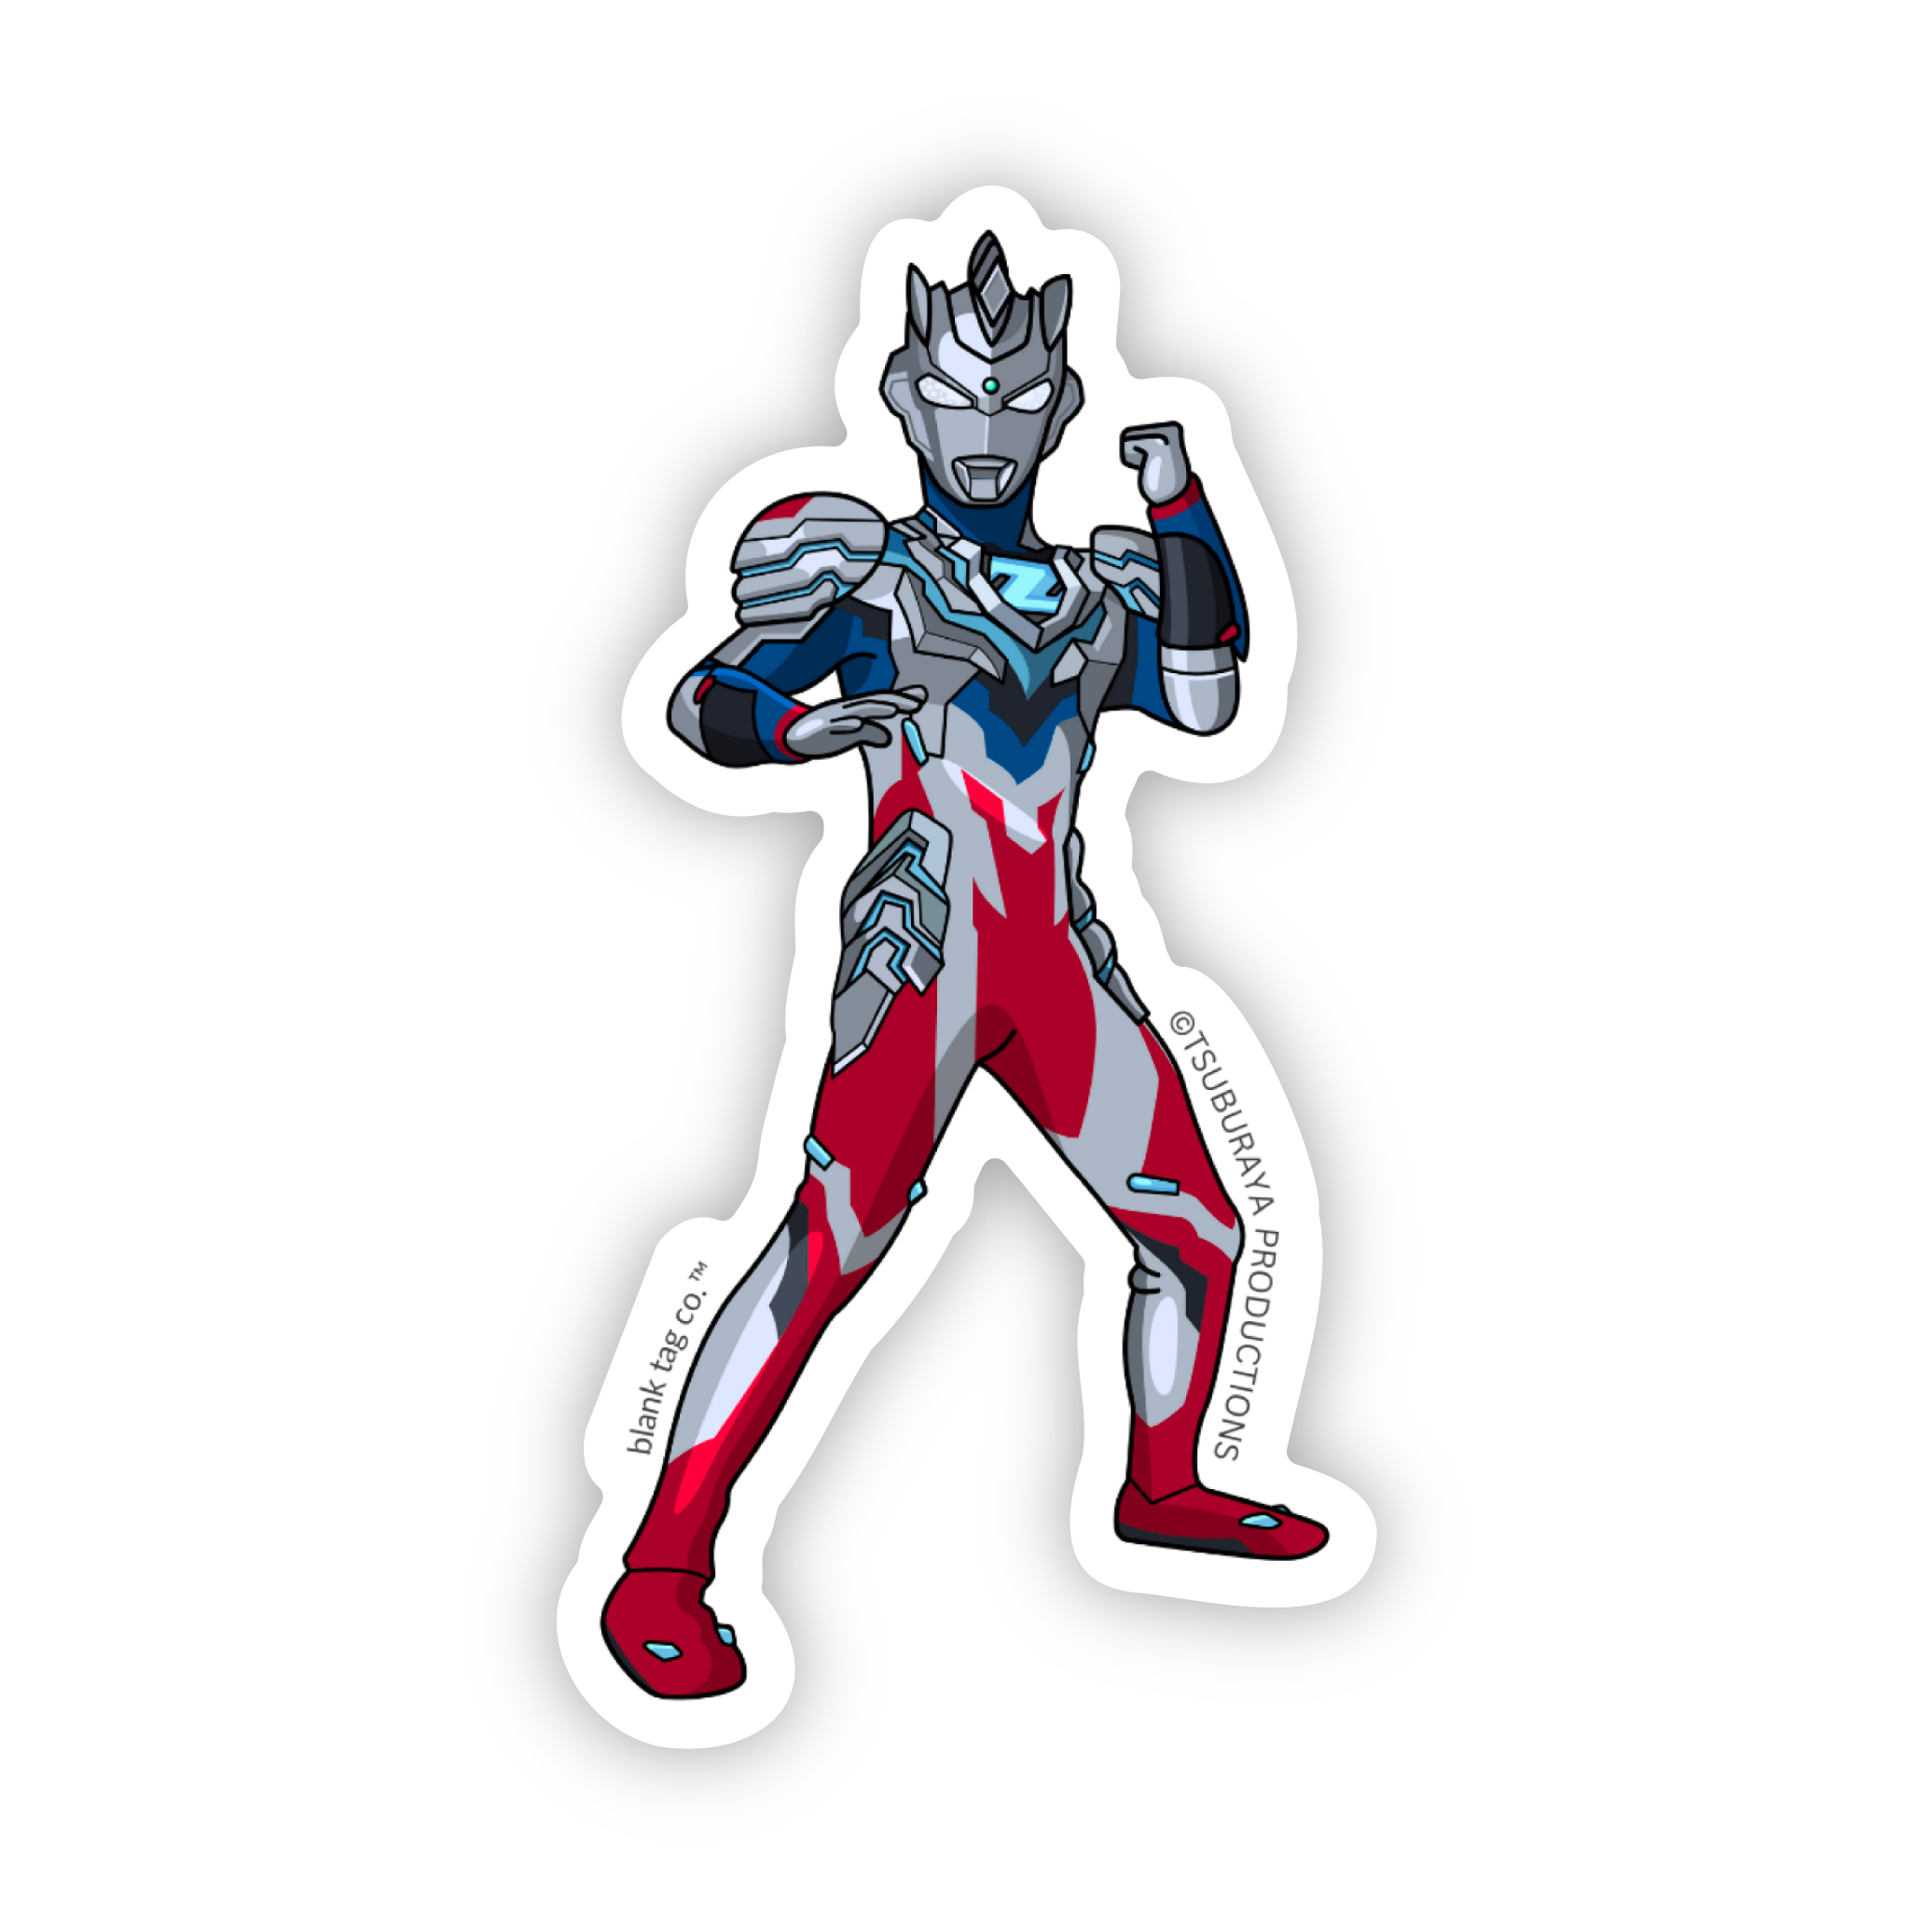 The Ultraman Z Sticker